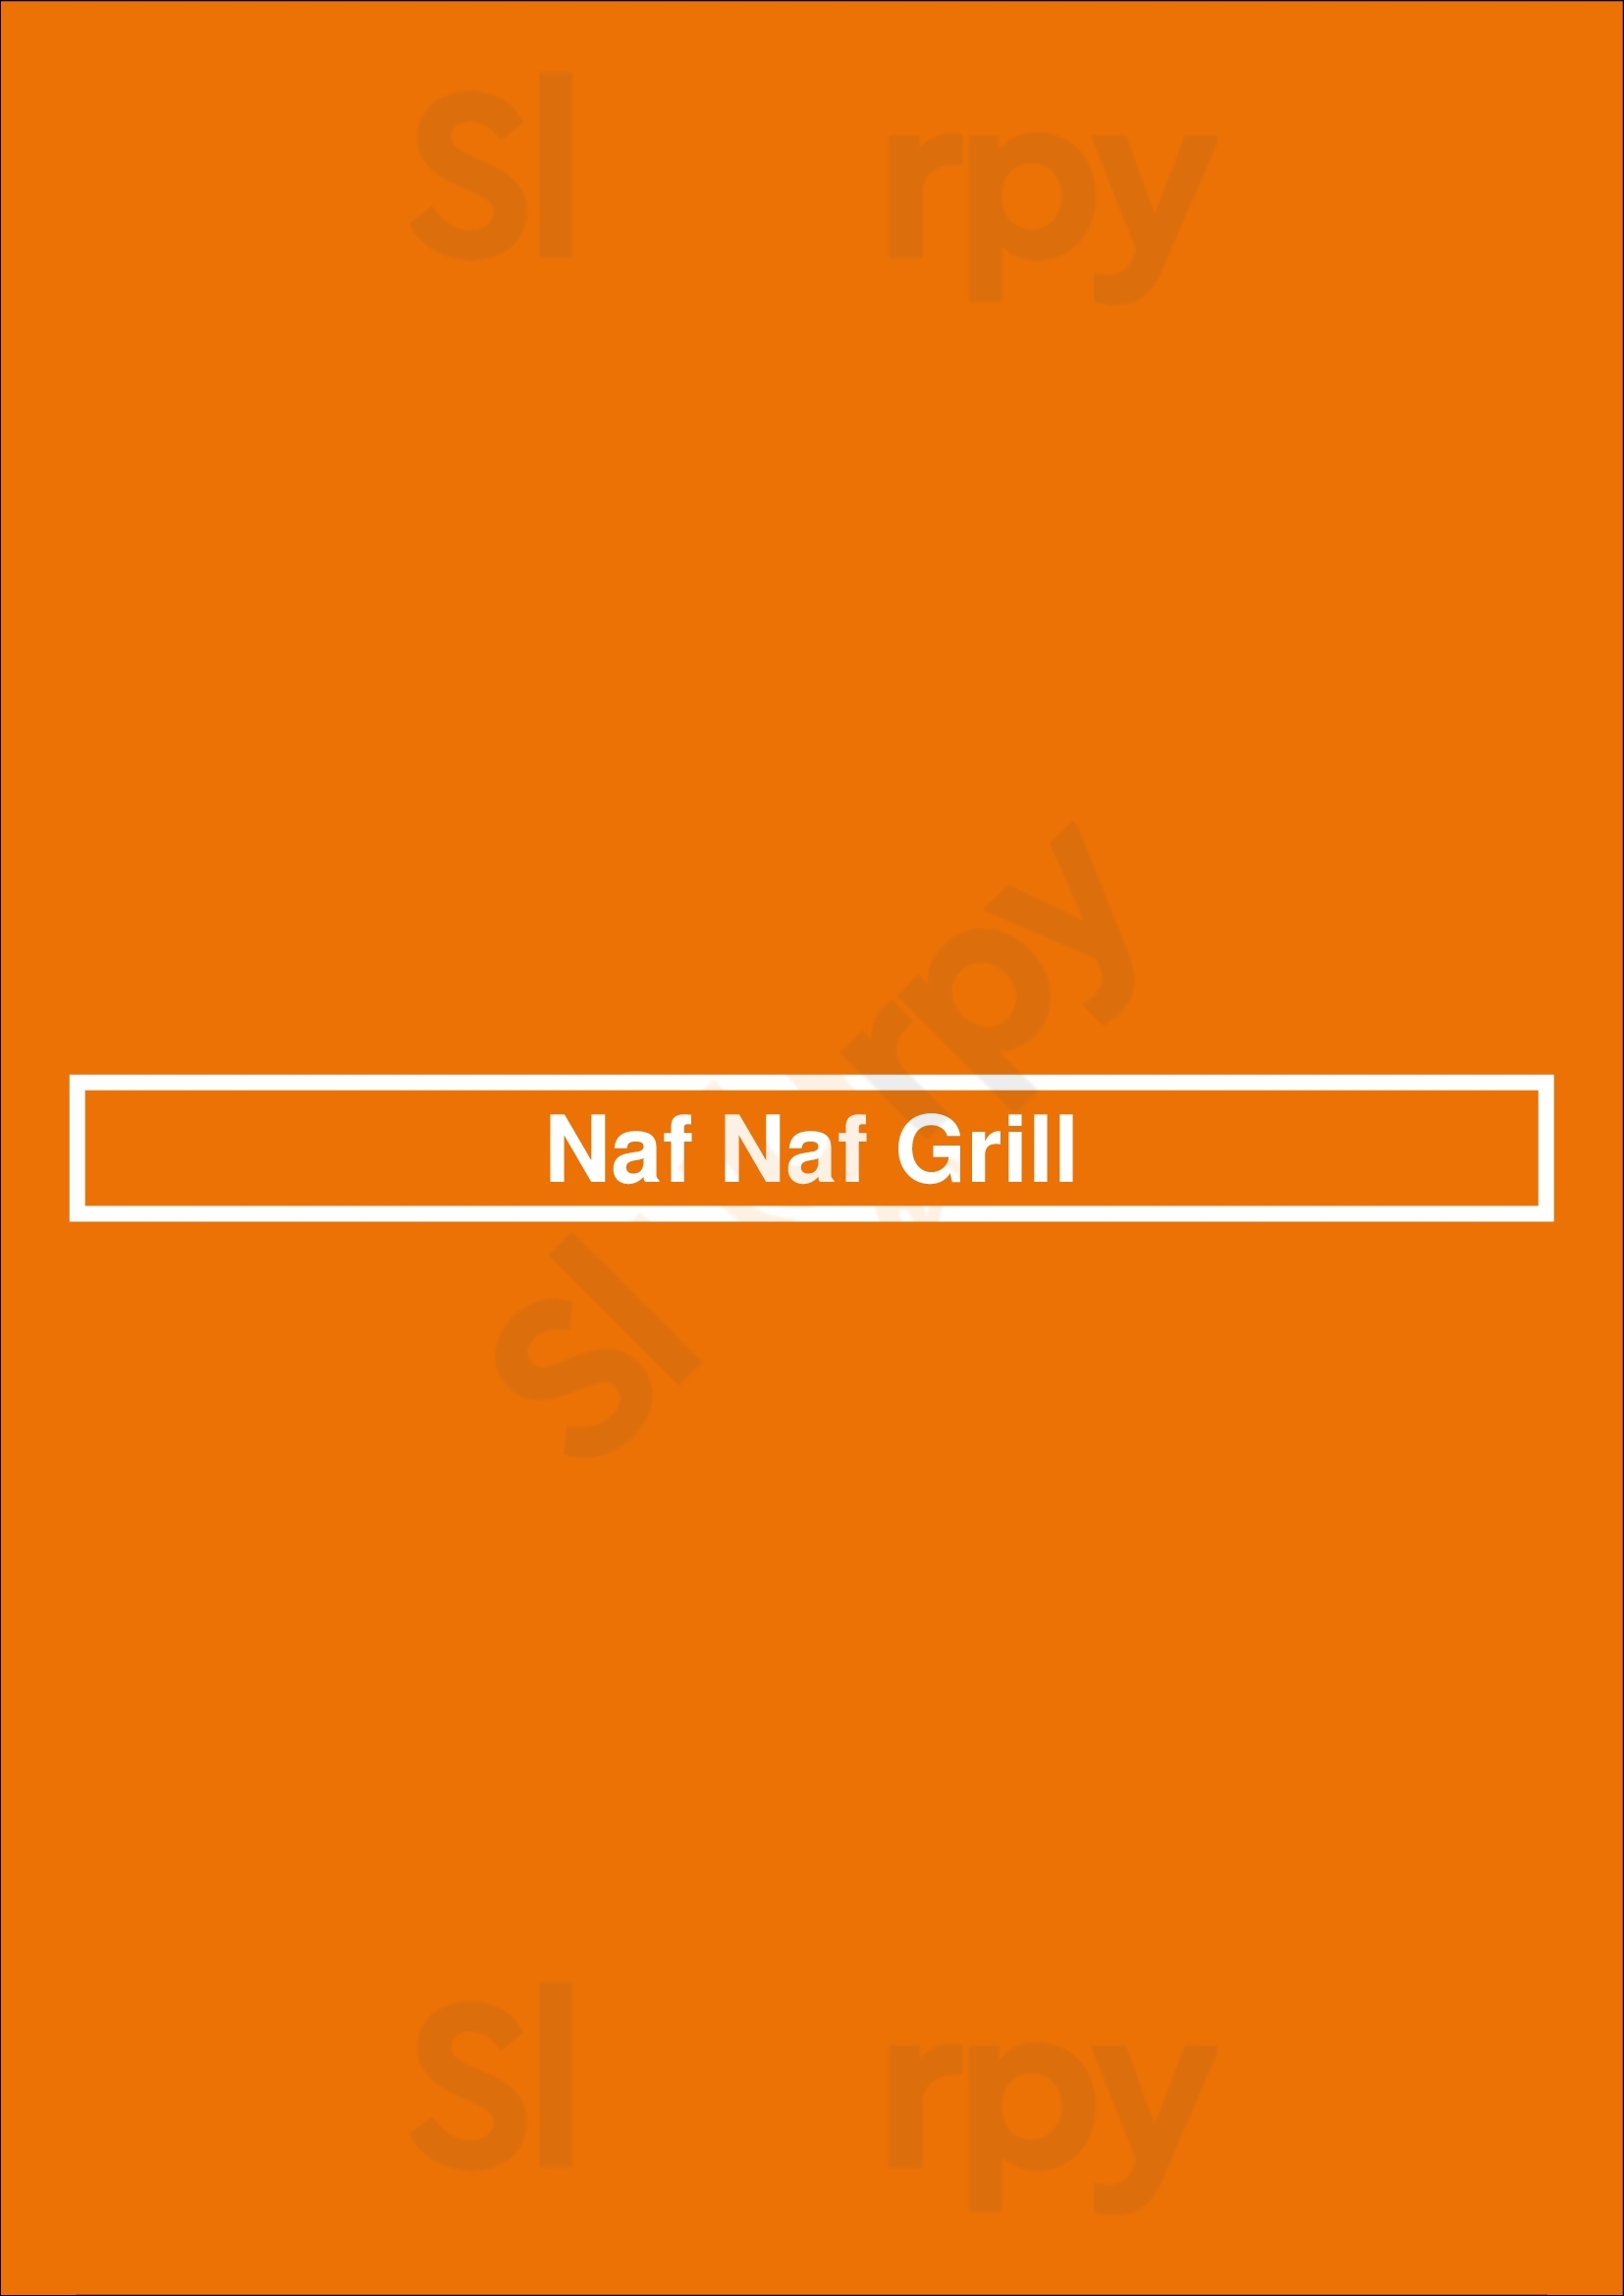 Naf Naf Grill Chicago Menu - 1